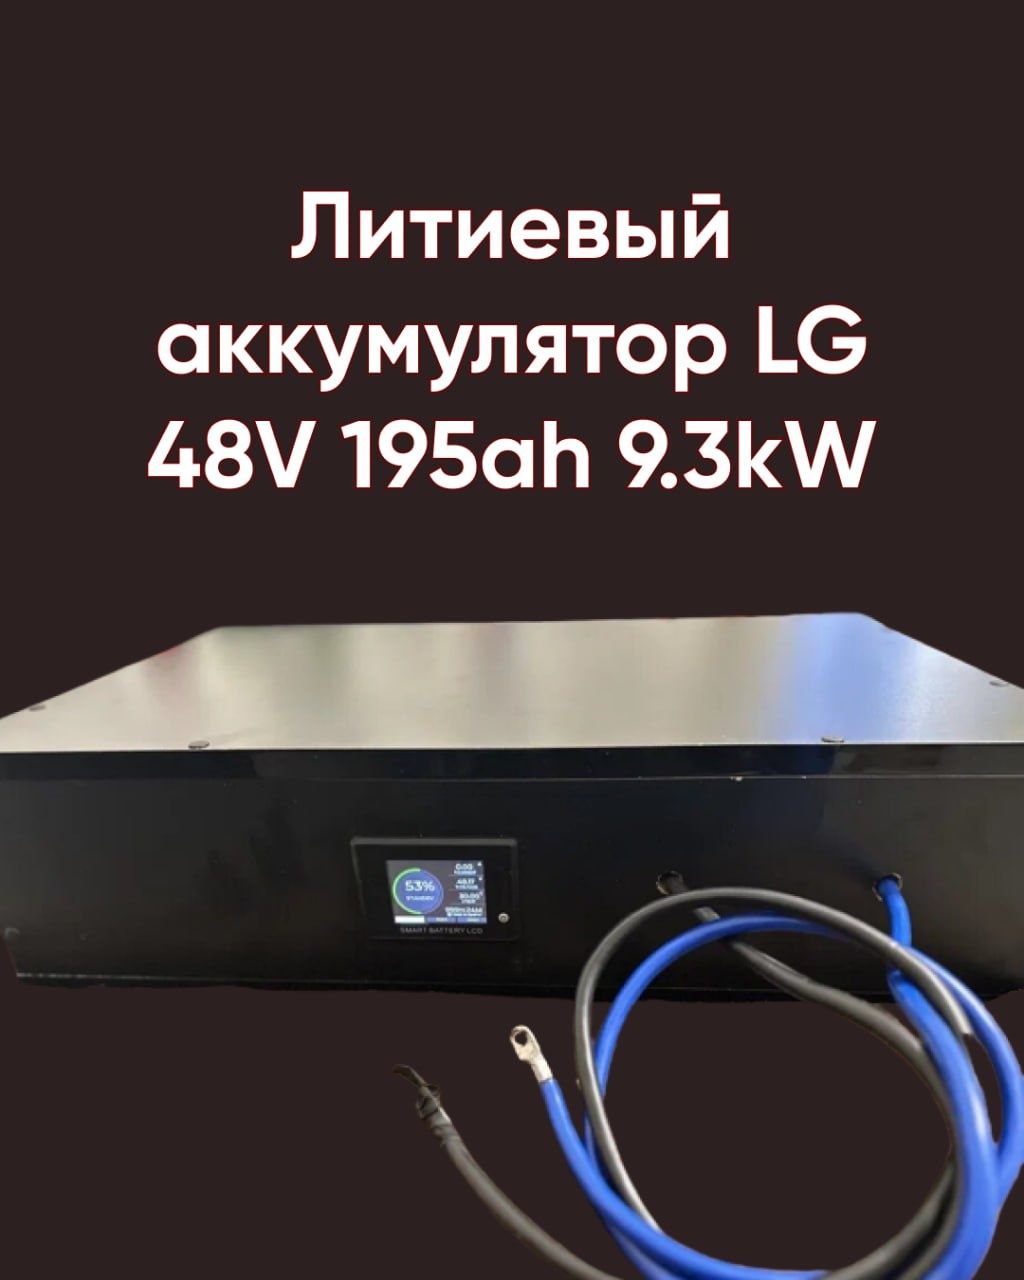 Литиевый аккумулятор LG 48V 195ah 9.3kW